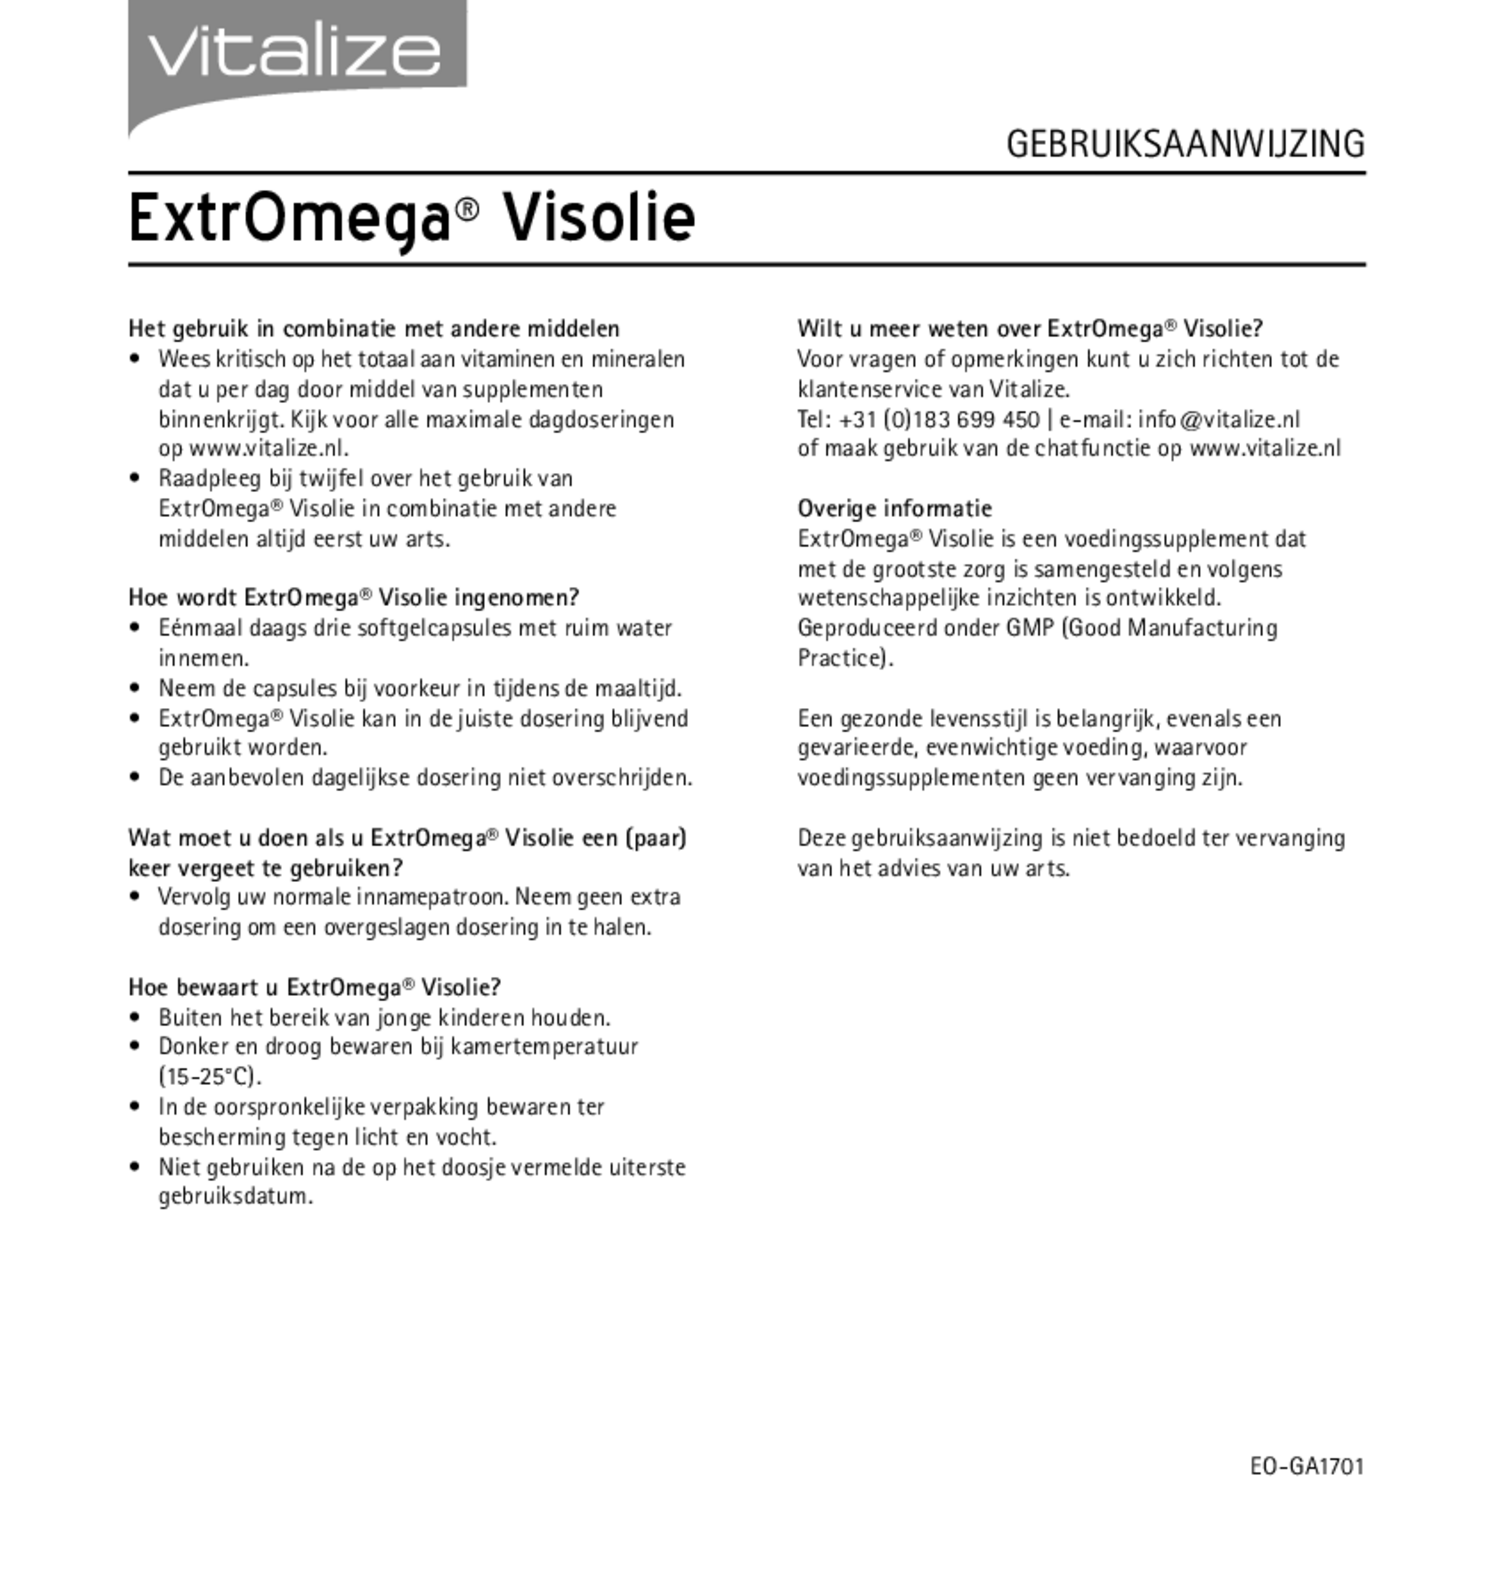 ExtrOmega Omega 3 Voordeel Capsules afbeelding van document #2, gebruiksaanwijzing